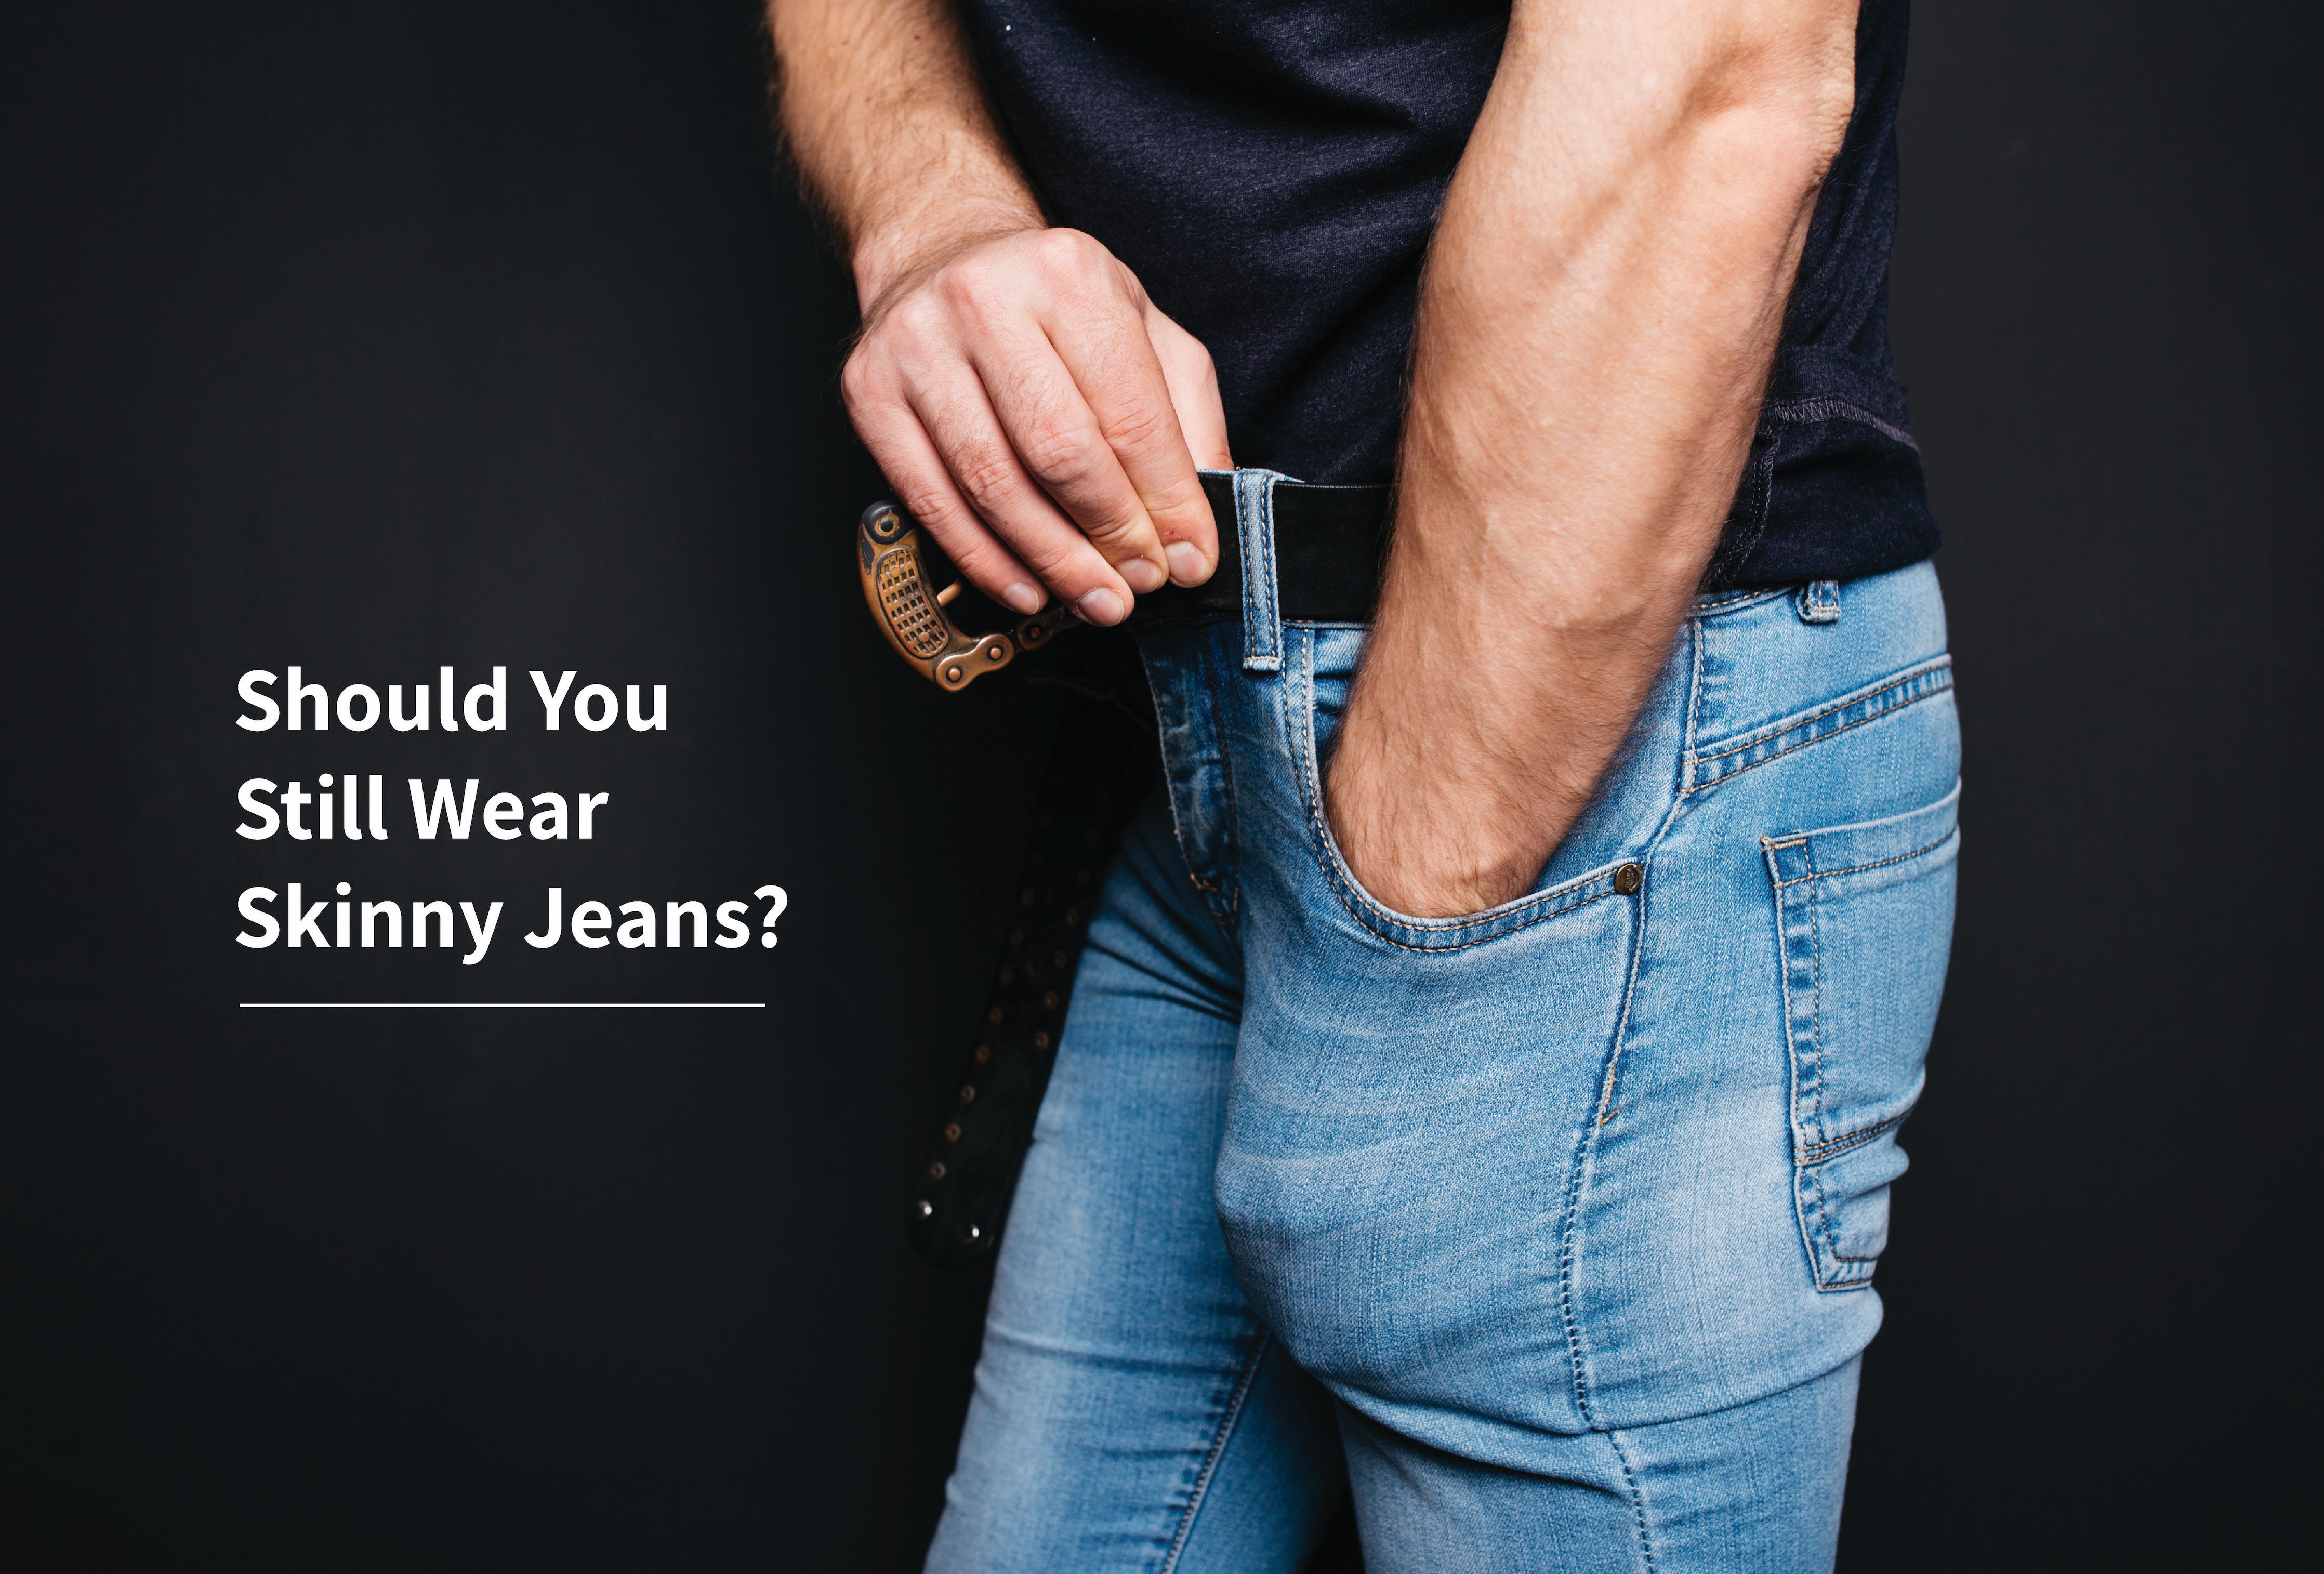 Tight Underwear Affects Male  Why Men Should Never Wear It